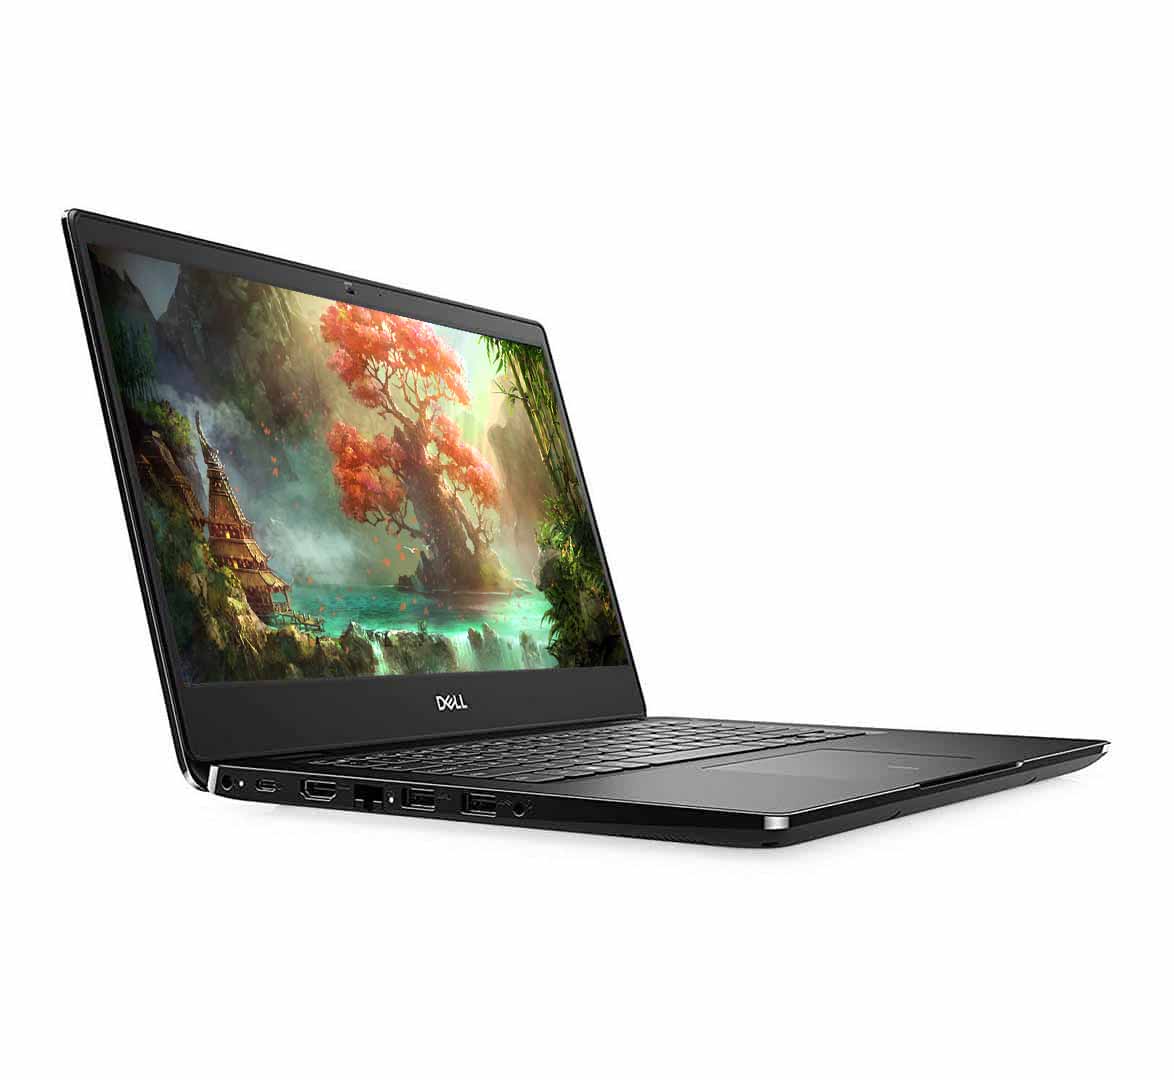 Dell Latitude 3400 Business Laptop, Intel Core i3-8th Generation CPU, 8GB RAM, 500GB HDD, 14 inch Display, Windows 10 Pro, Refurbished Laptop